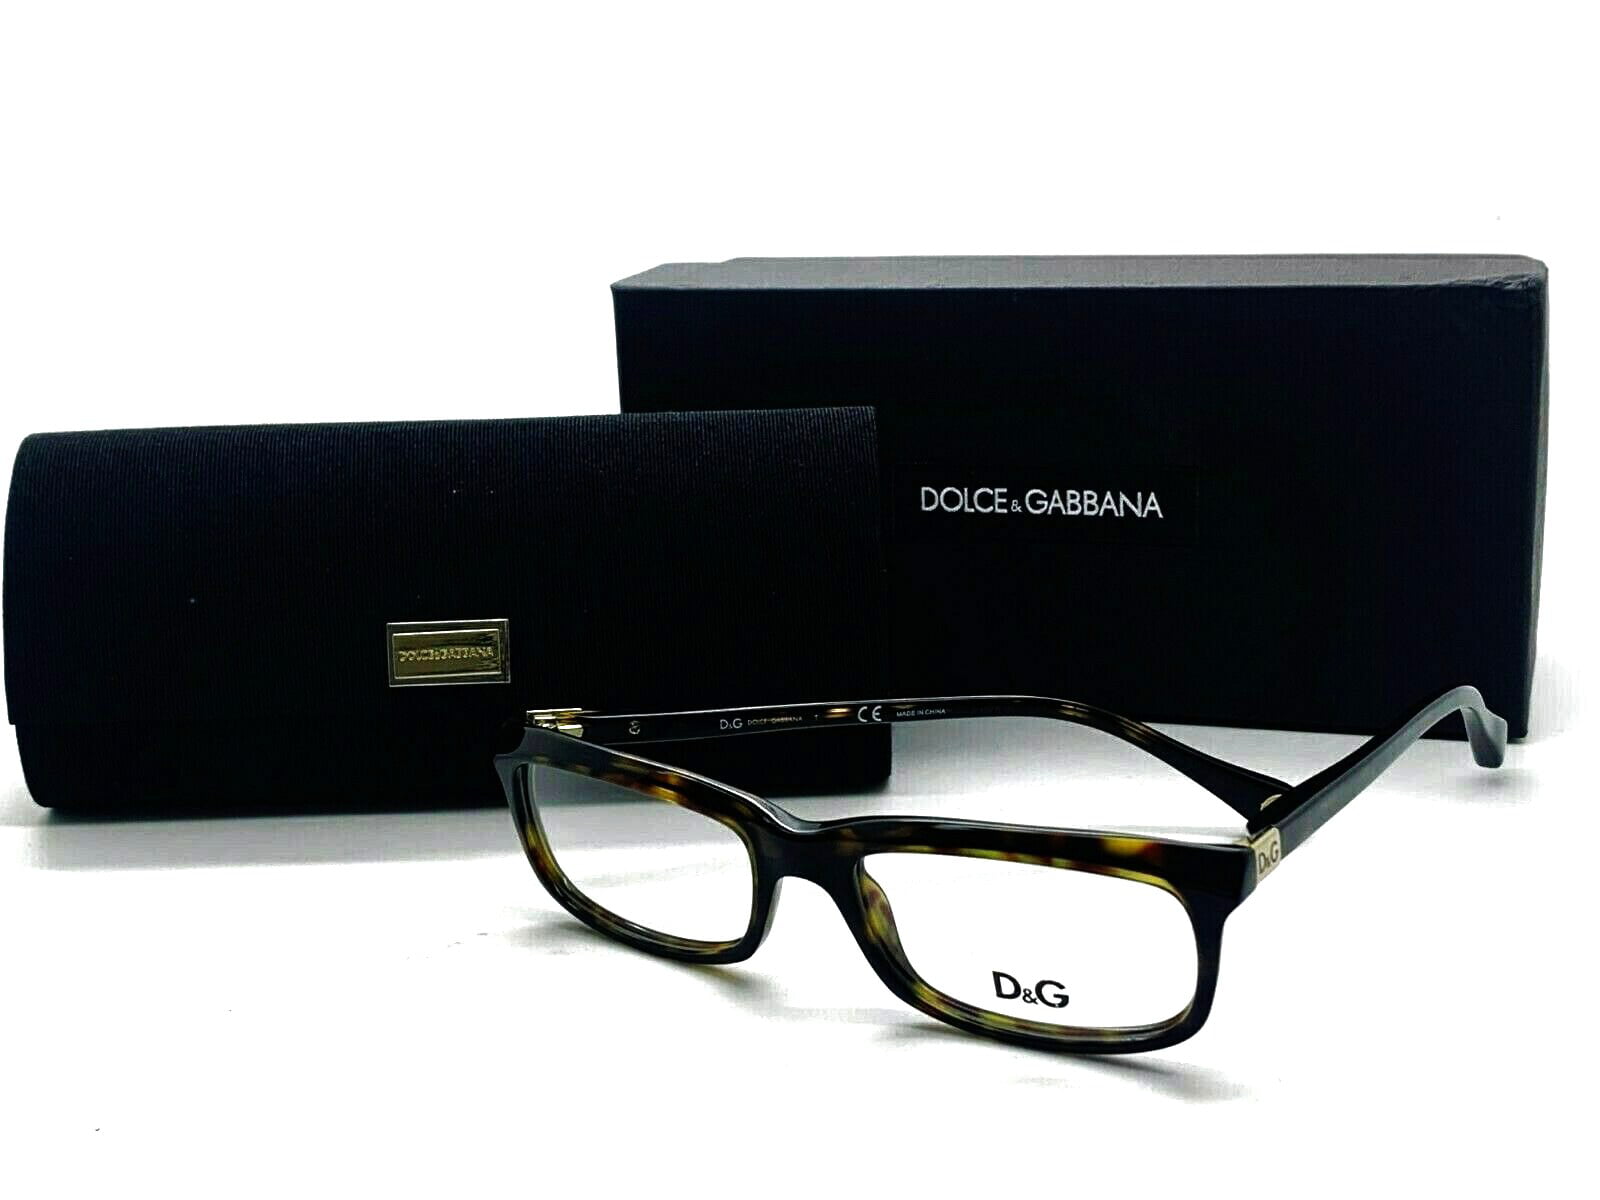 16 135 Dolce Gabbana Eyeglasses D&G 5017 016 SilverWoody Brown Half Rim 51